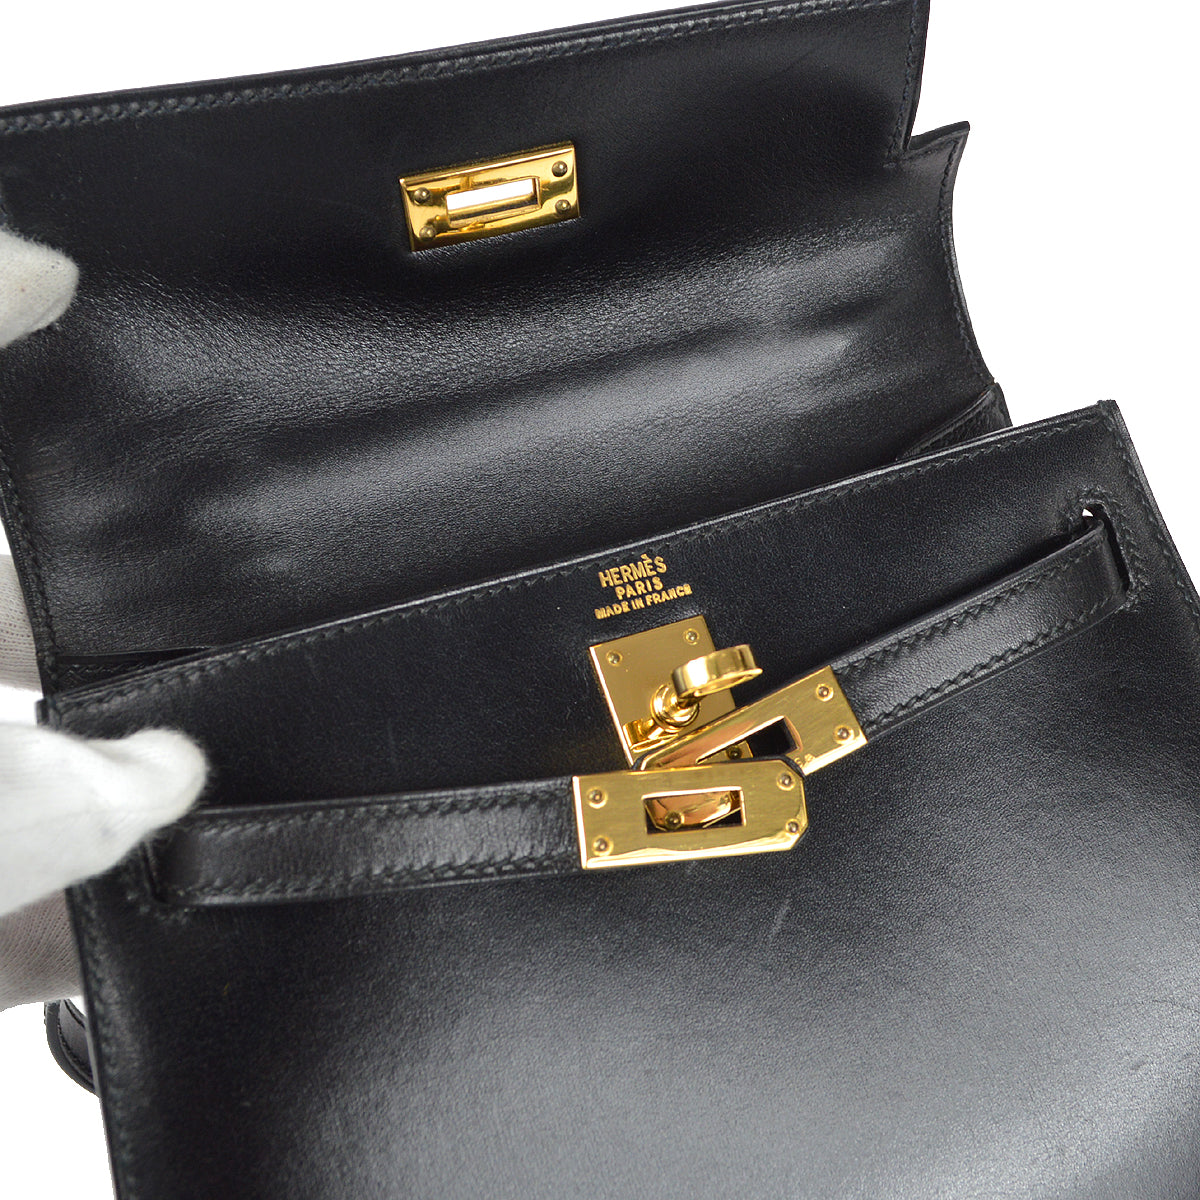 HERMES PARIS Kelly sport' bag in black box calf, inner…